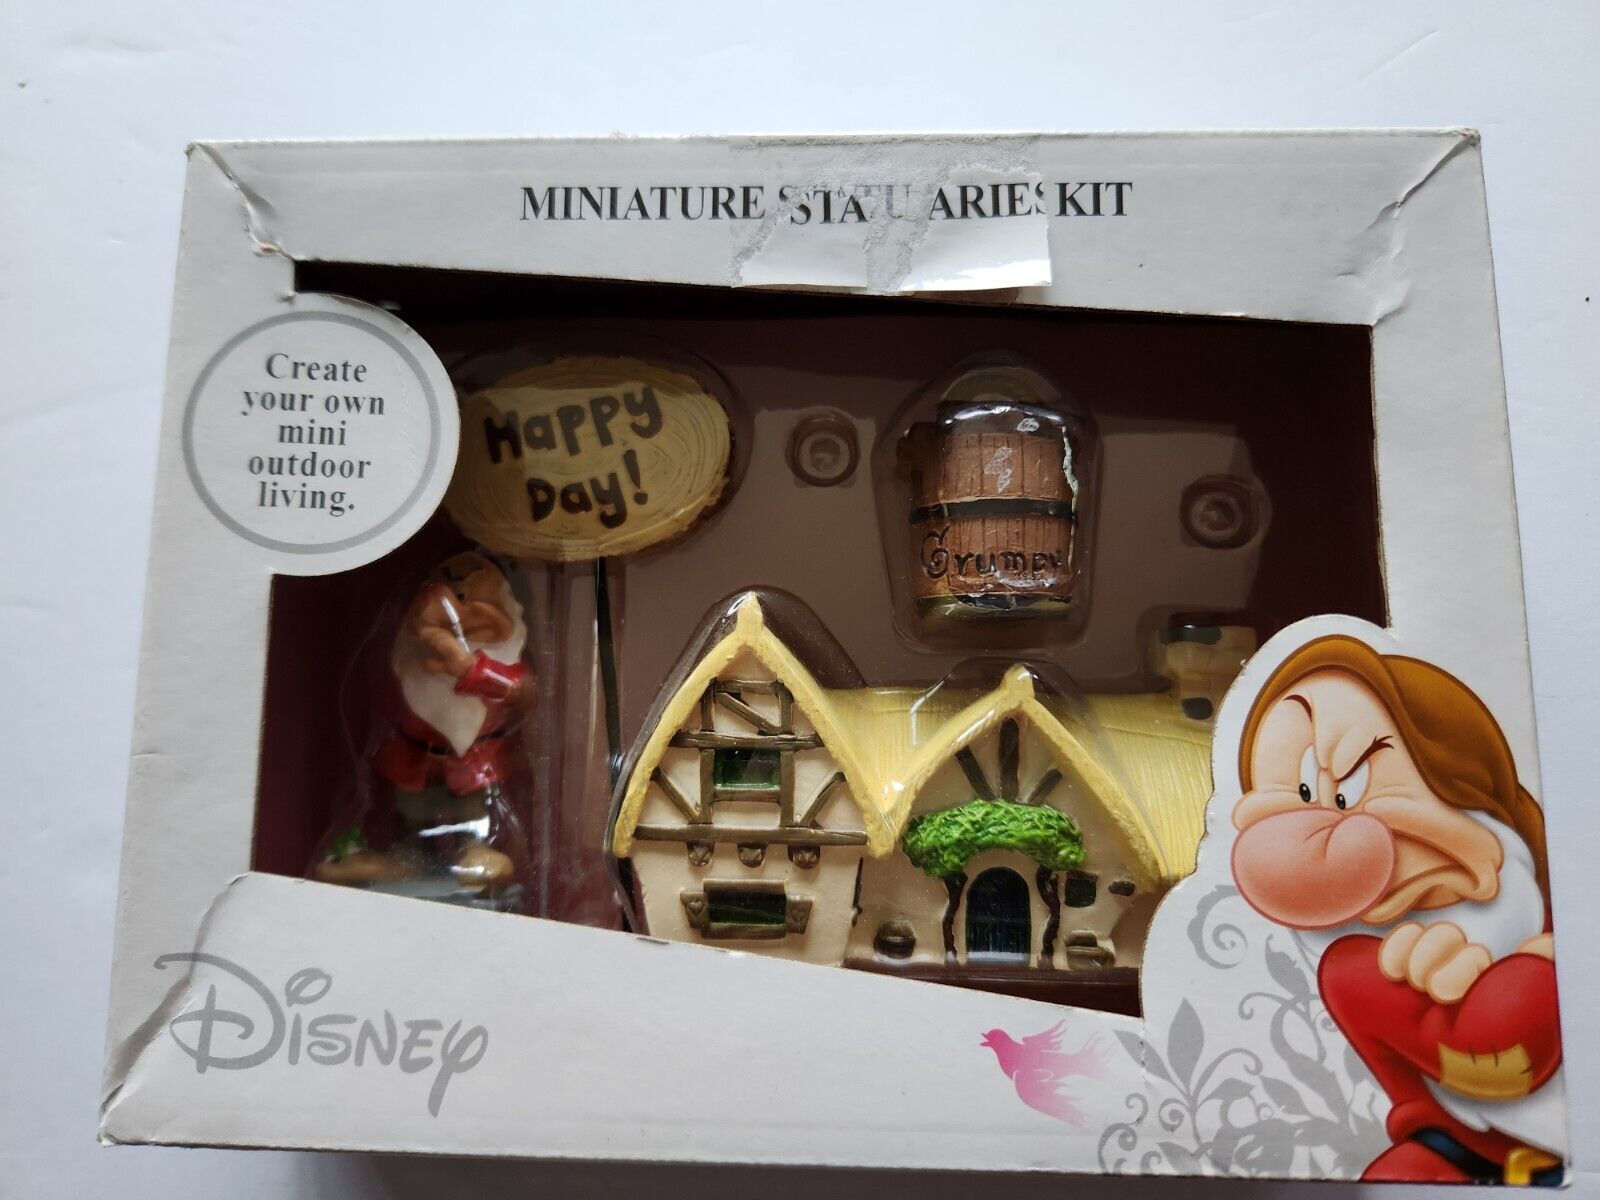 Disney Miniature Statuaries Kit Garden Grumpy Dwarf Snow White NEW